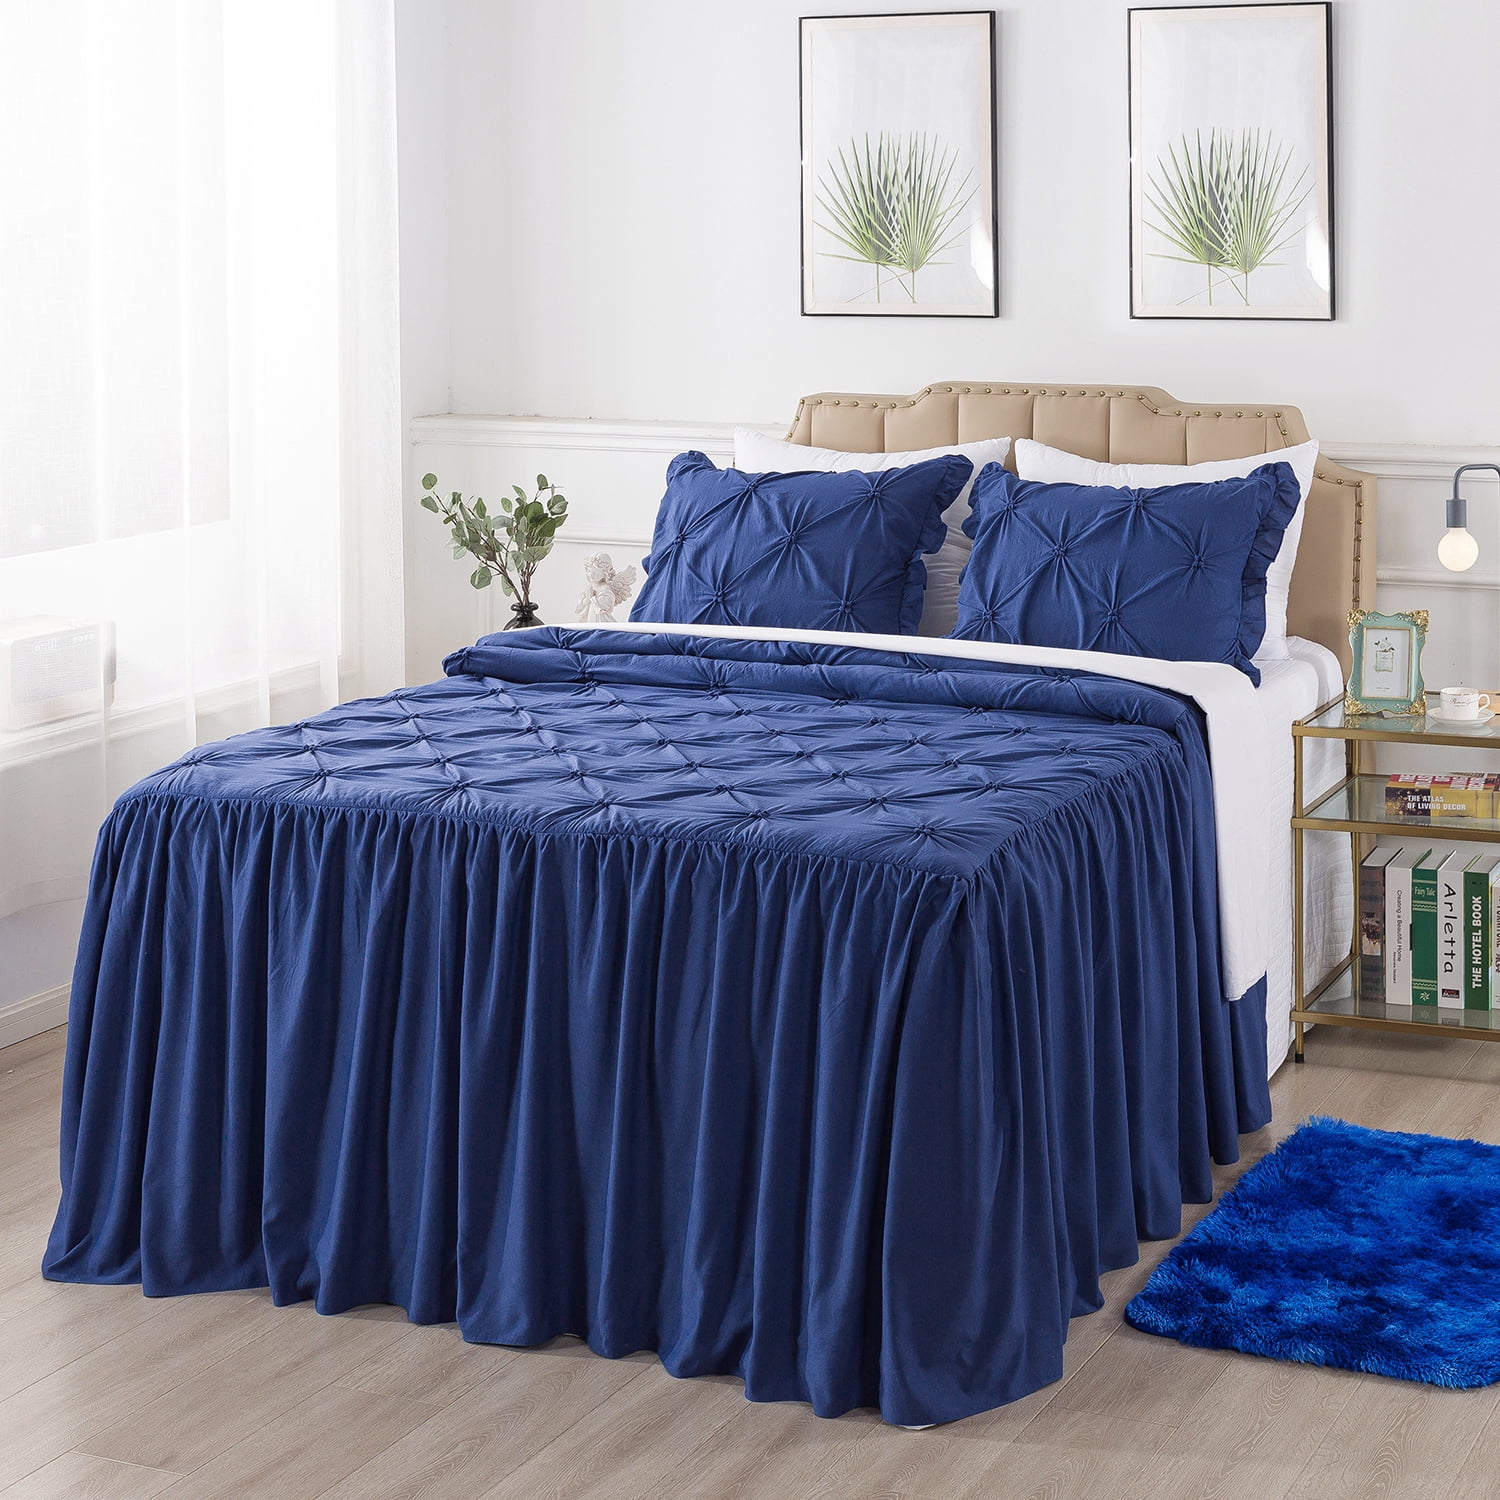 JML 4 Piece Ruffled Bedspread Set For Queen Size Bed, Elastic Pleat ...